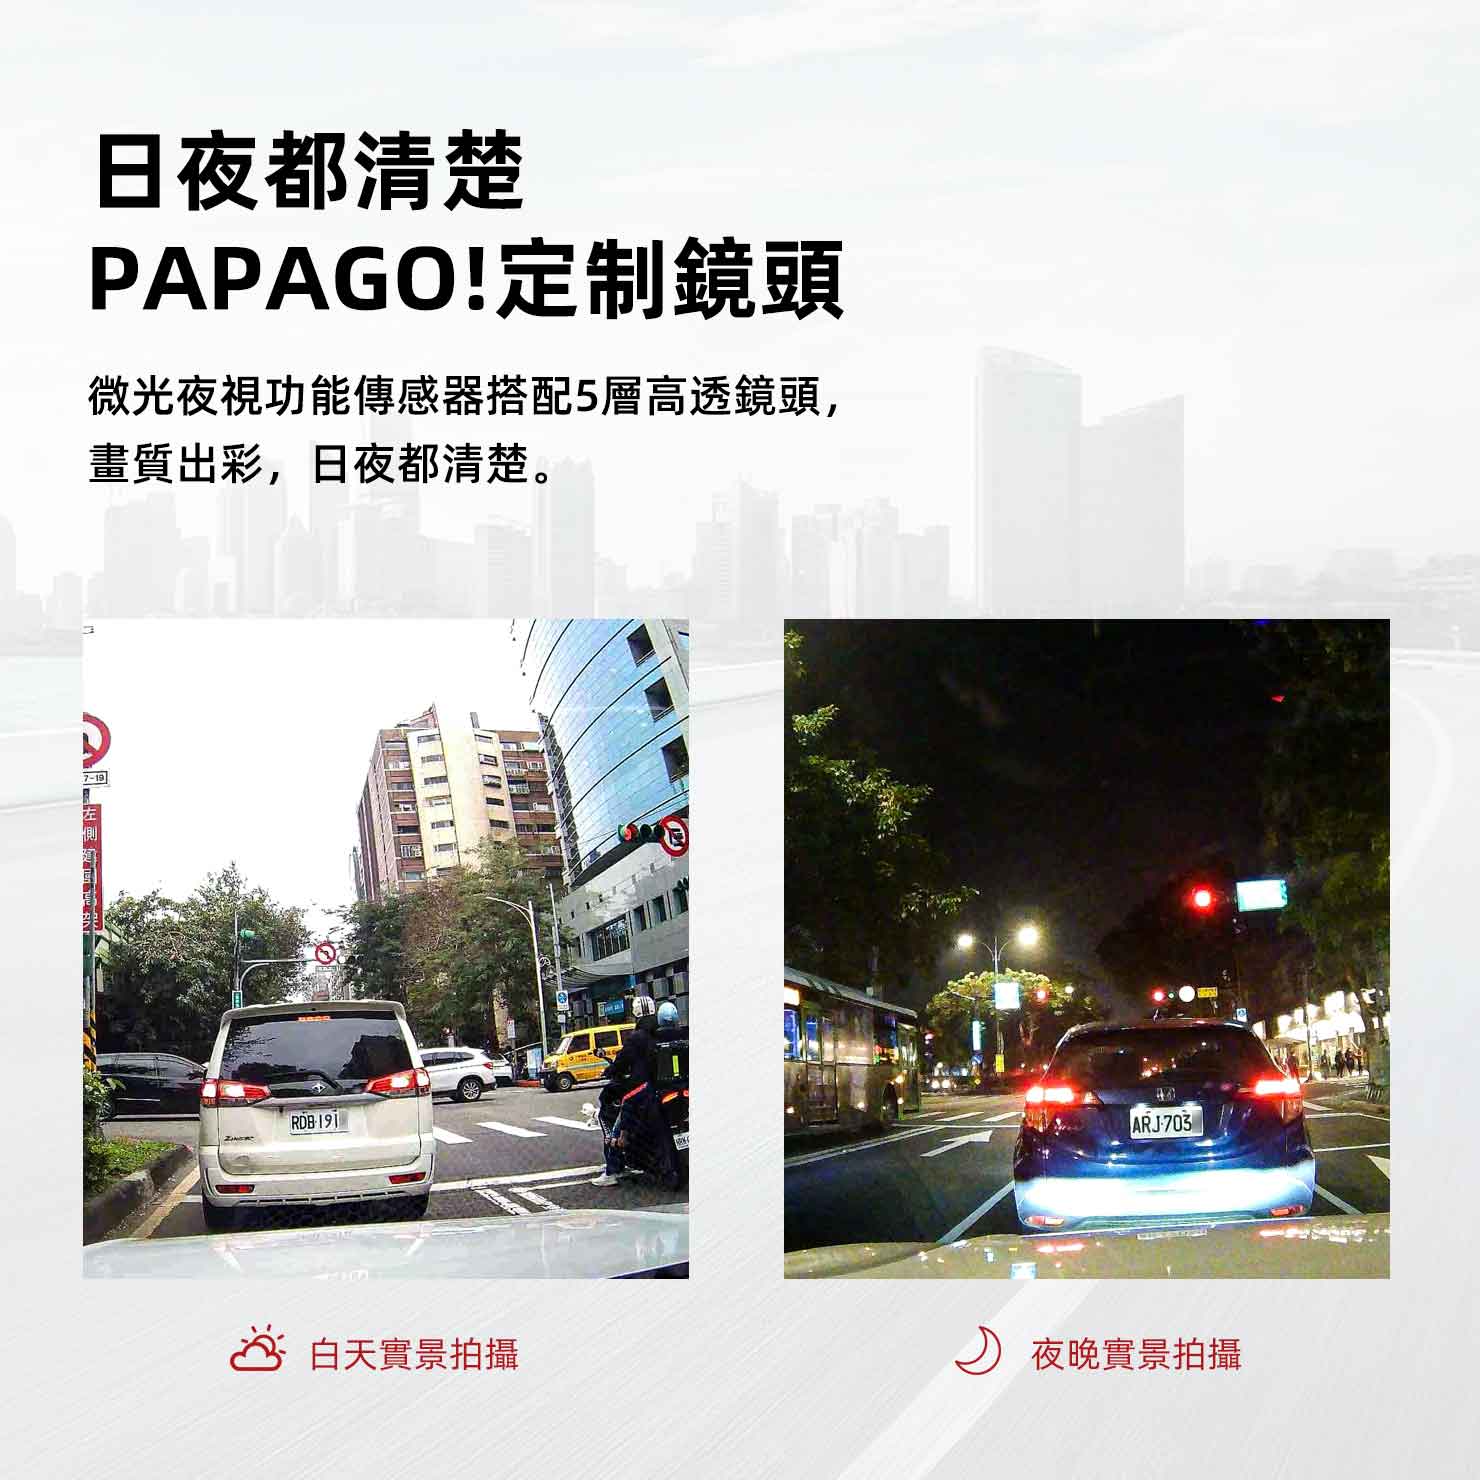 PAPAGO! FX760ZTS 行車紀錄器 產品介紹3